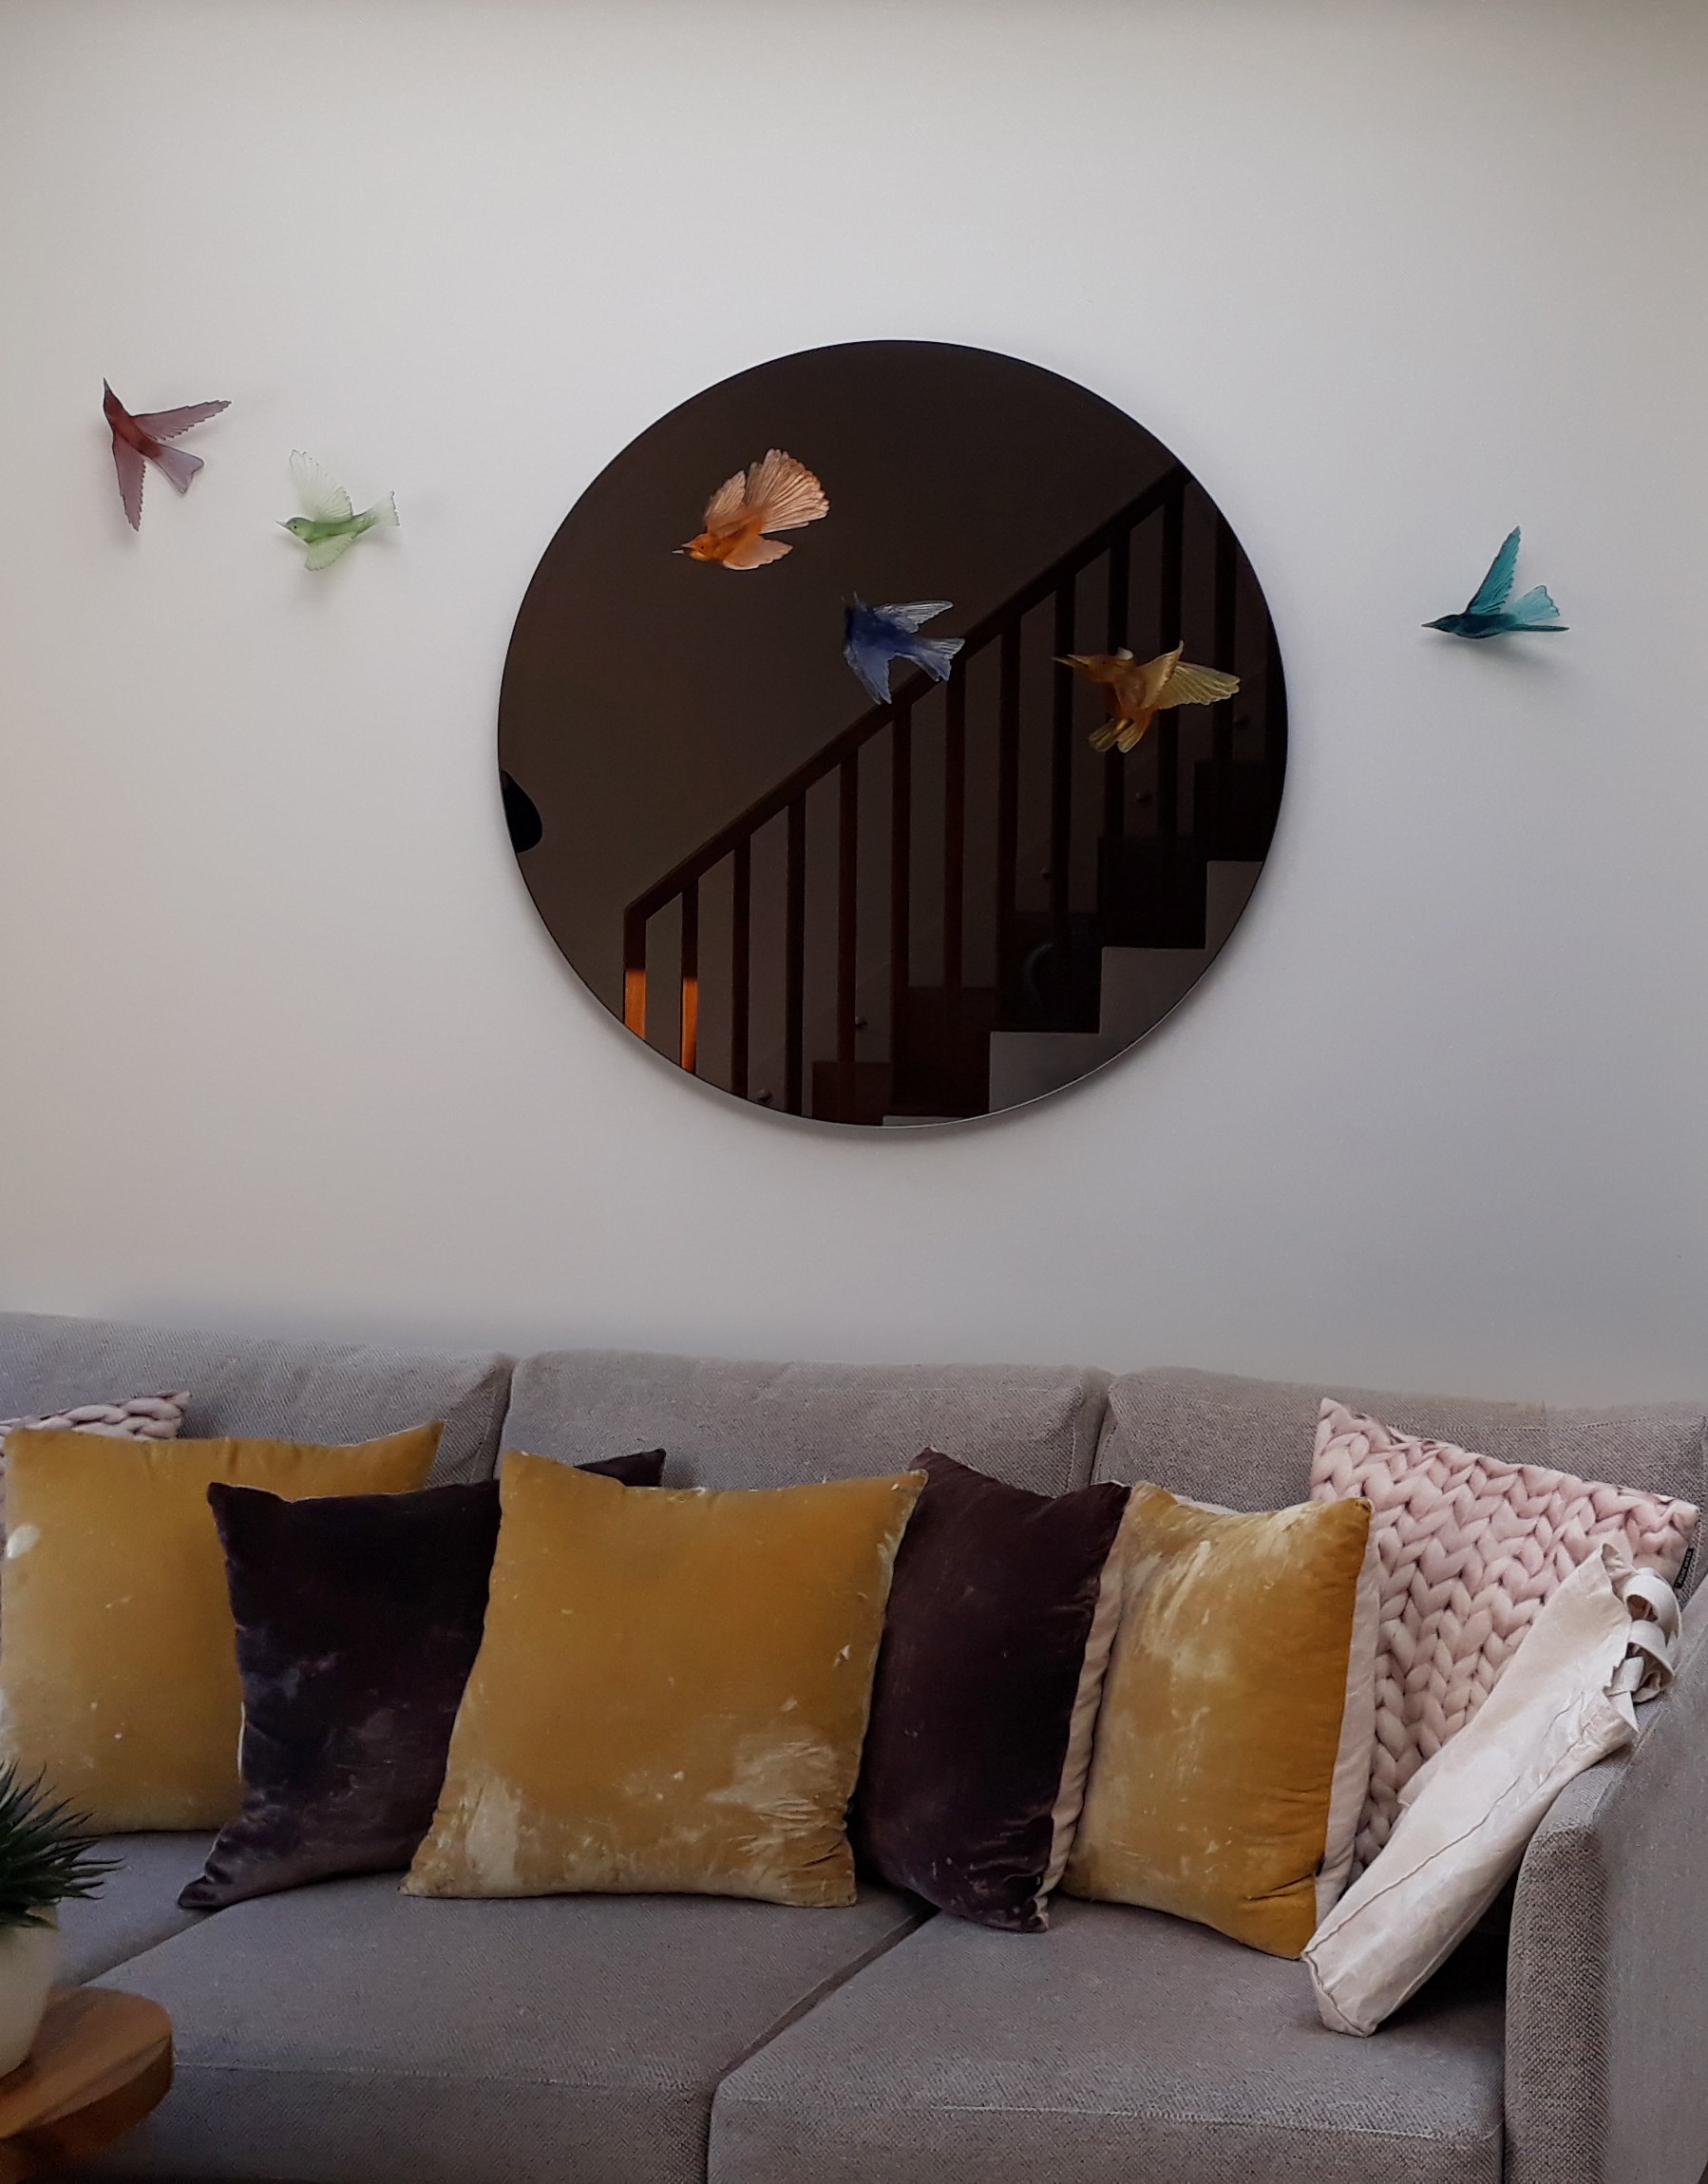 living room decorative mirror art with lukeke design birds